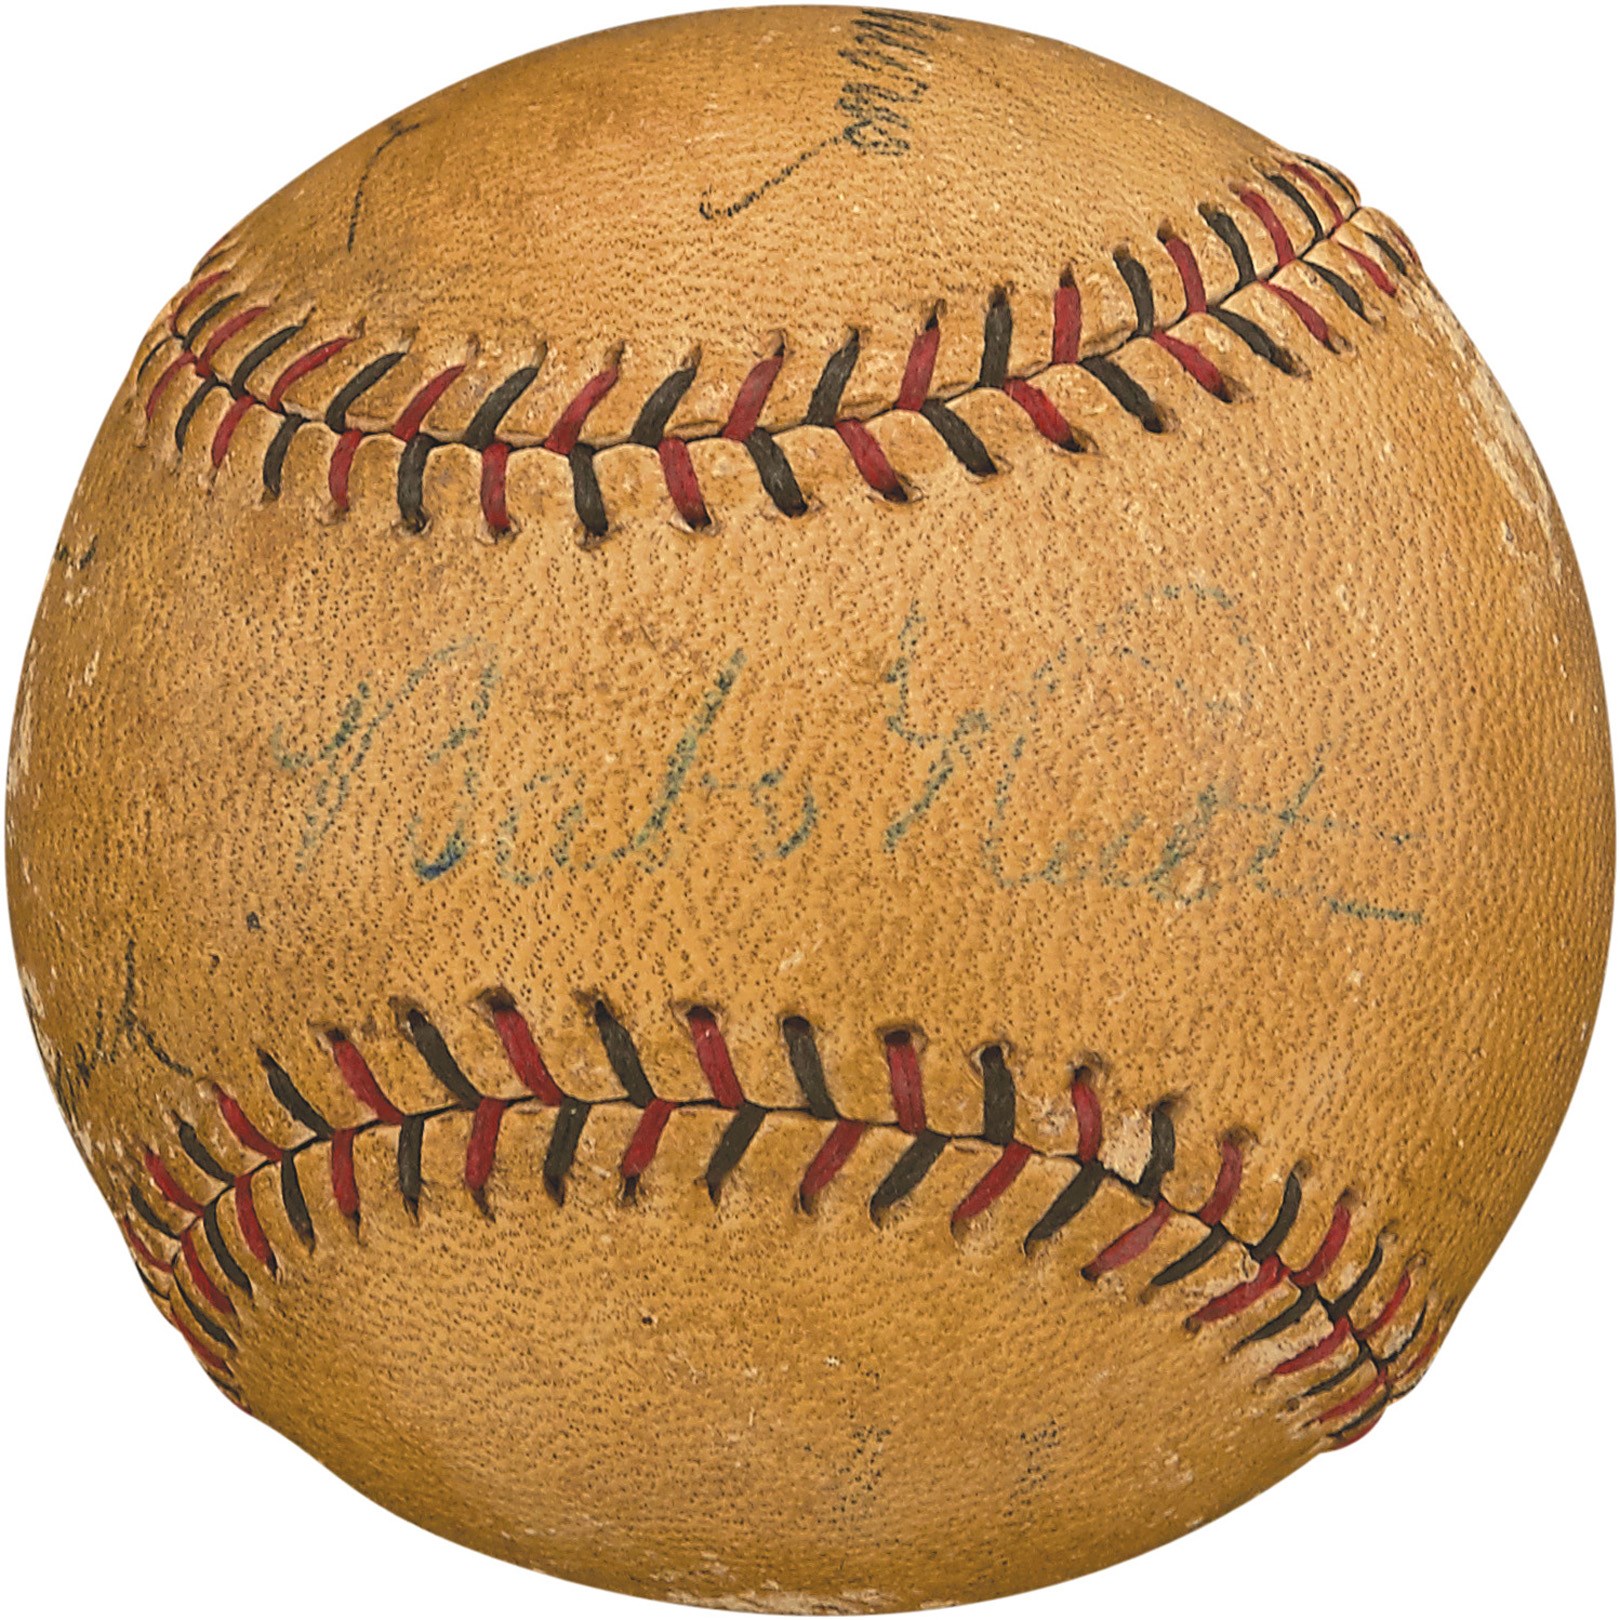 Babe Ruth Multi Signed 1930 World Series Game Used Baseball - Direct Family Provenance (PSA)